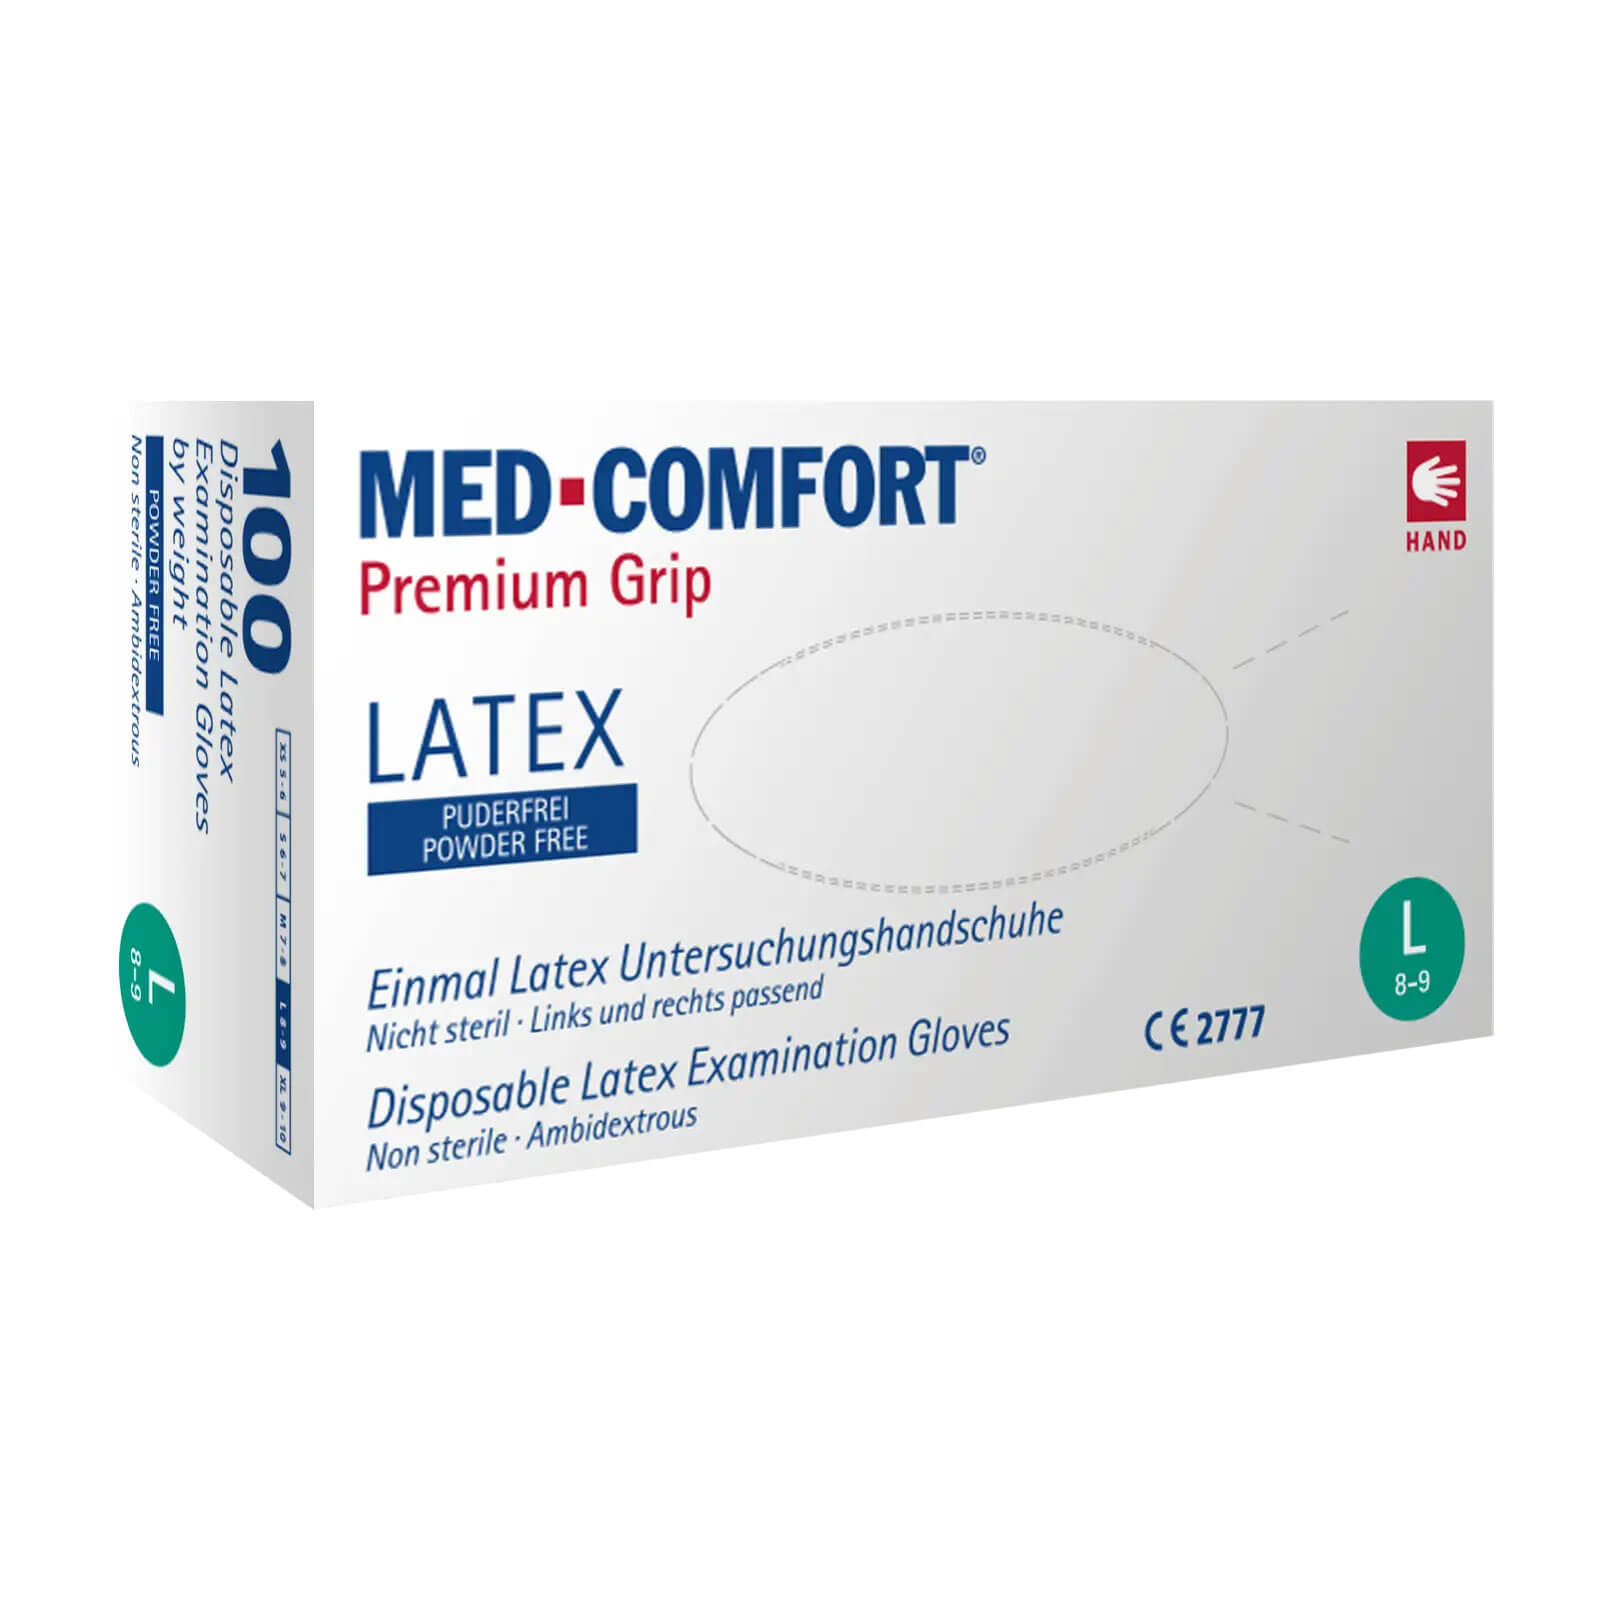 Med-Comfort Premium Grip Latex puderfrei XL 100 Stück